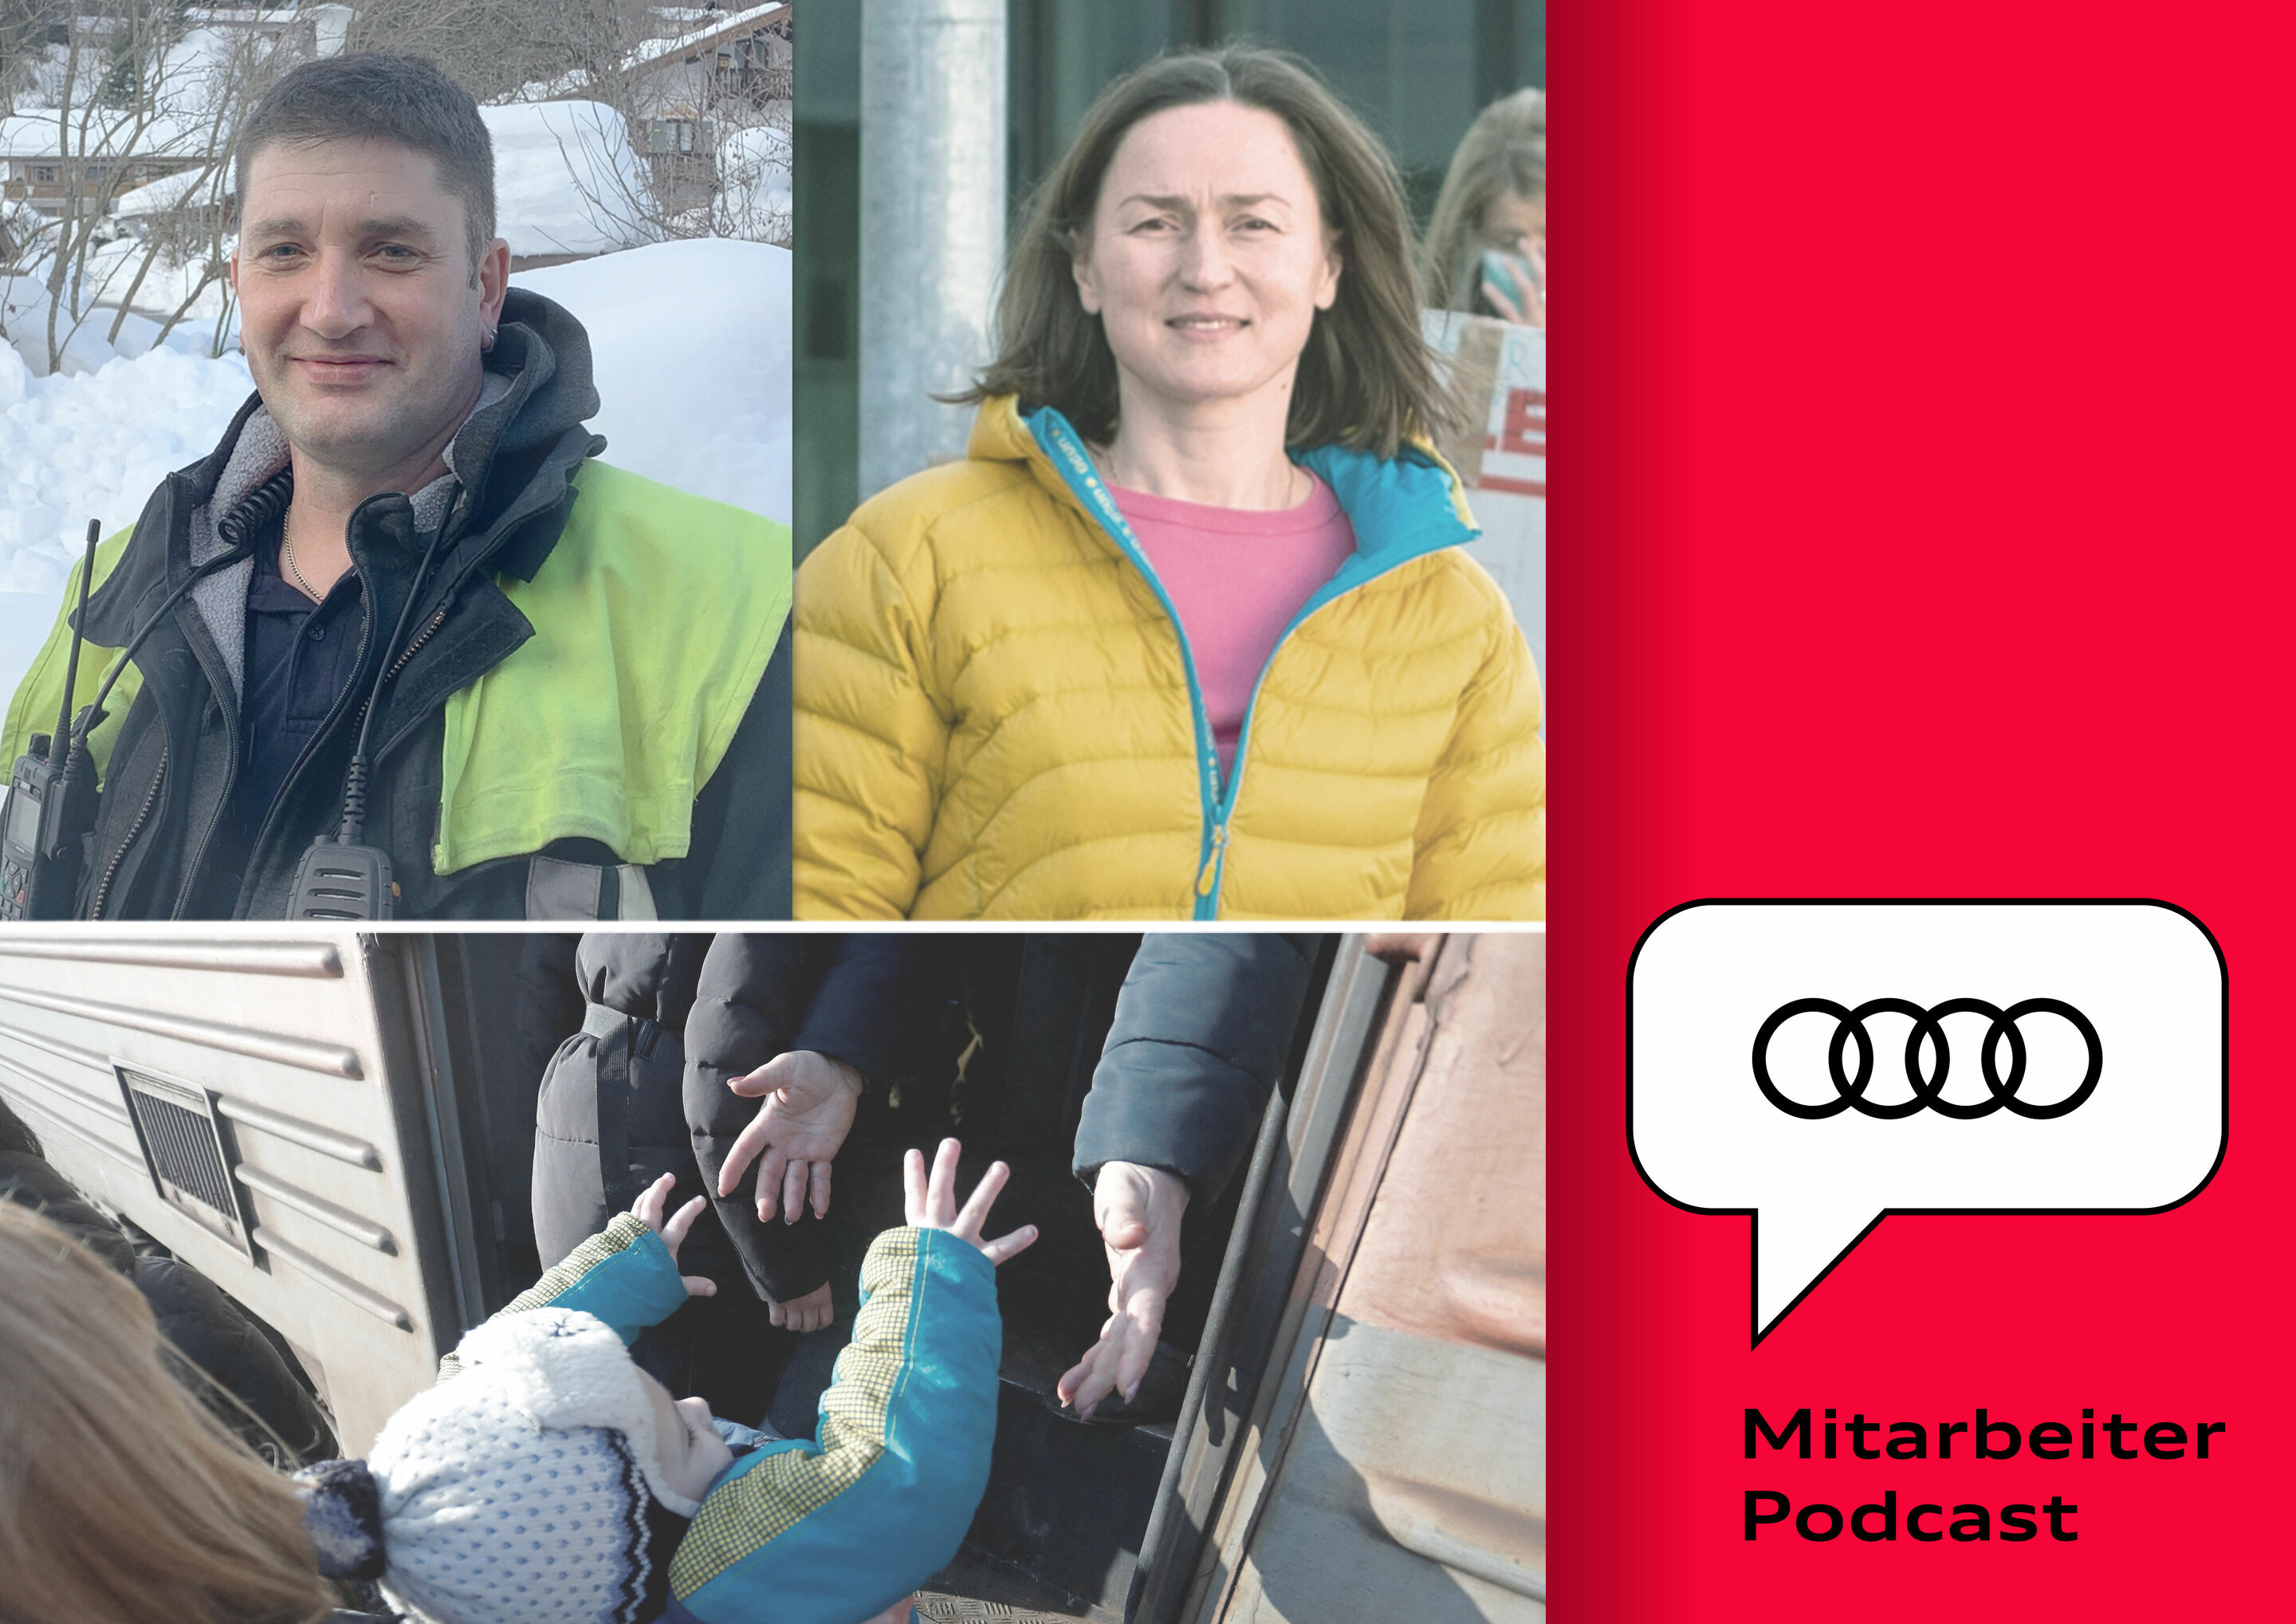 Aid for Ukraine: Audi employees are volunteering